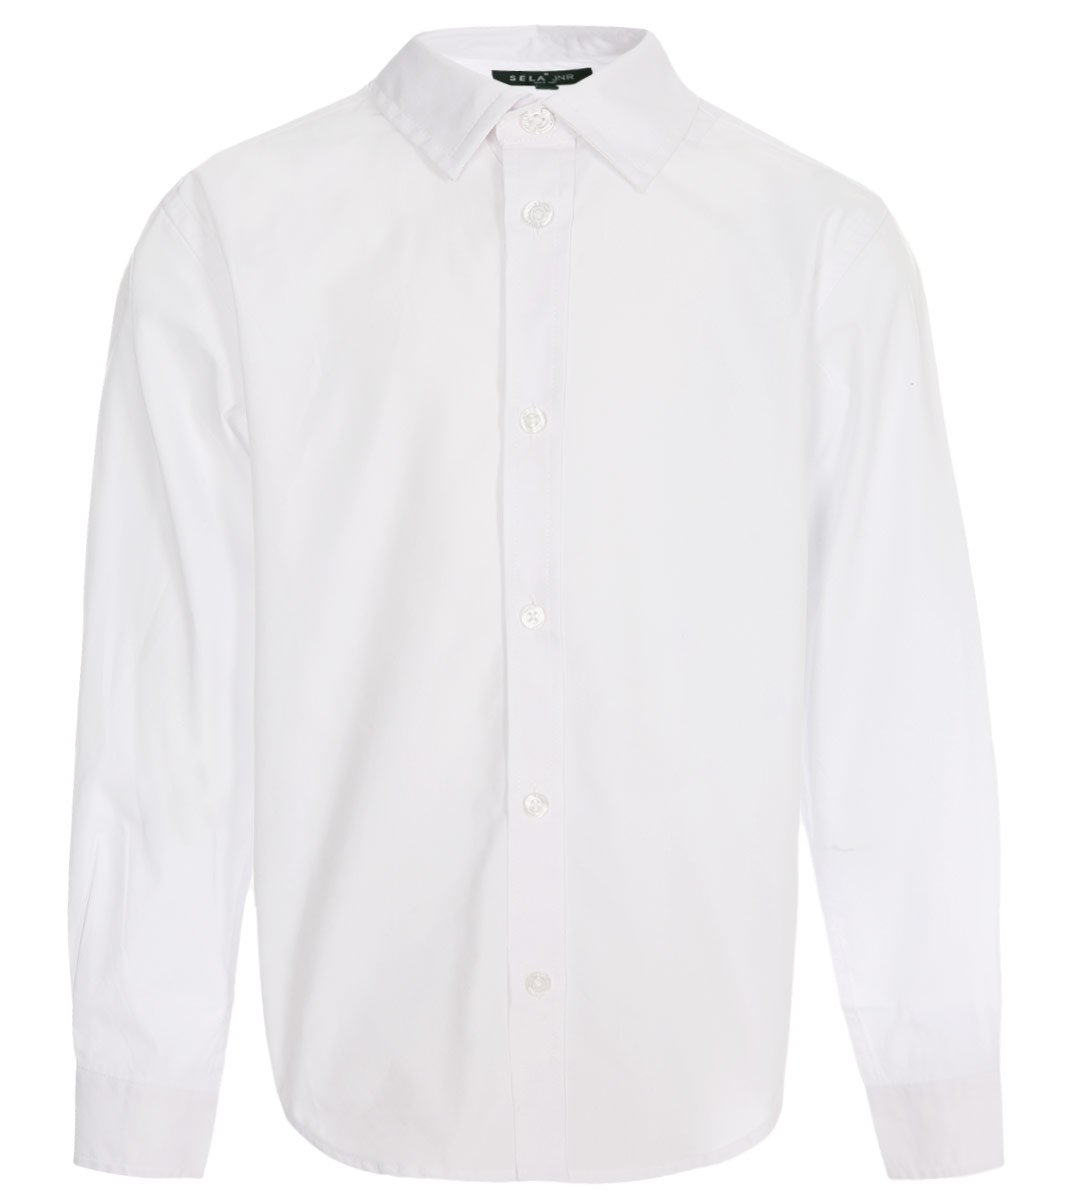 Рубашка для мальчика Sela, цвет: белый. H-812/236-8310. Размер 122